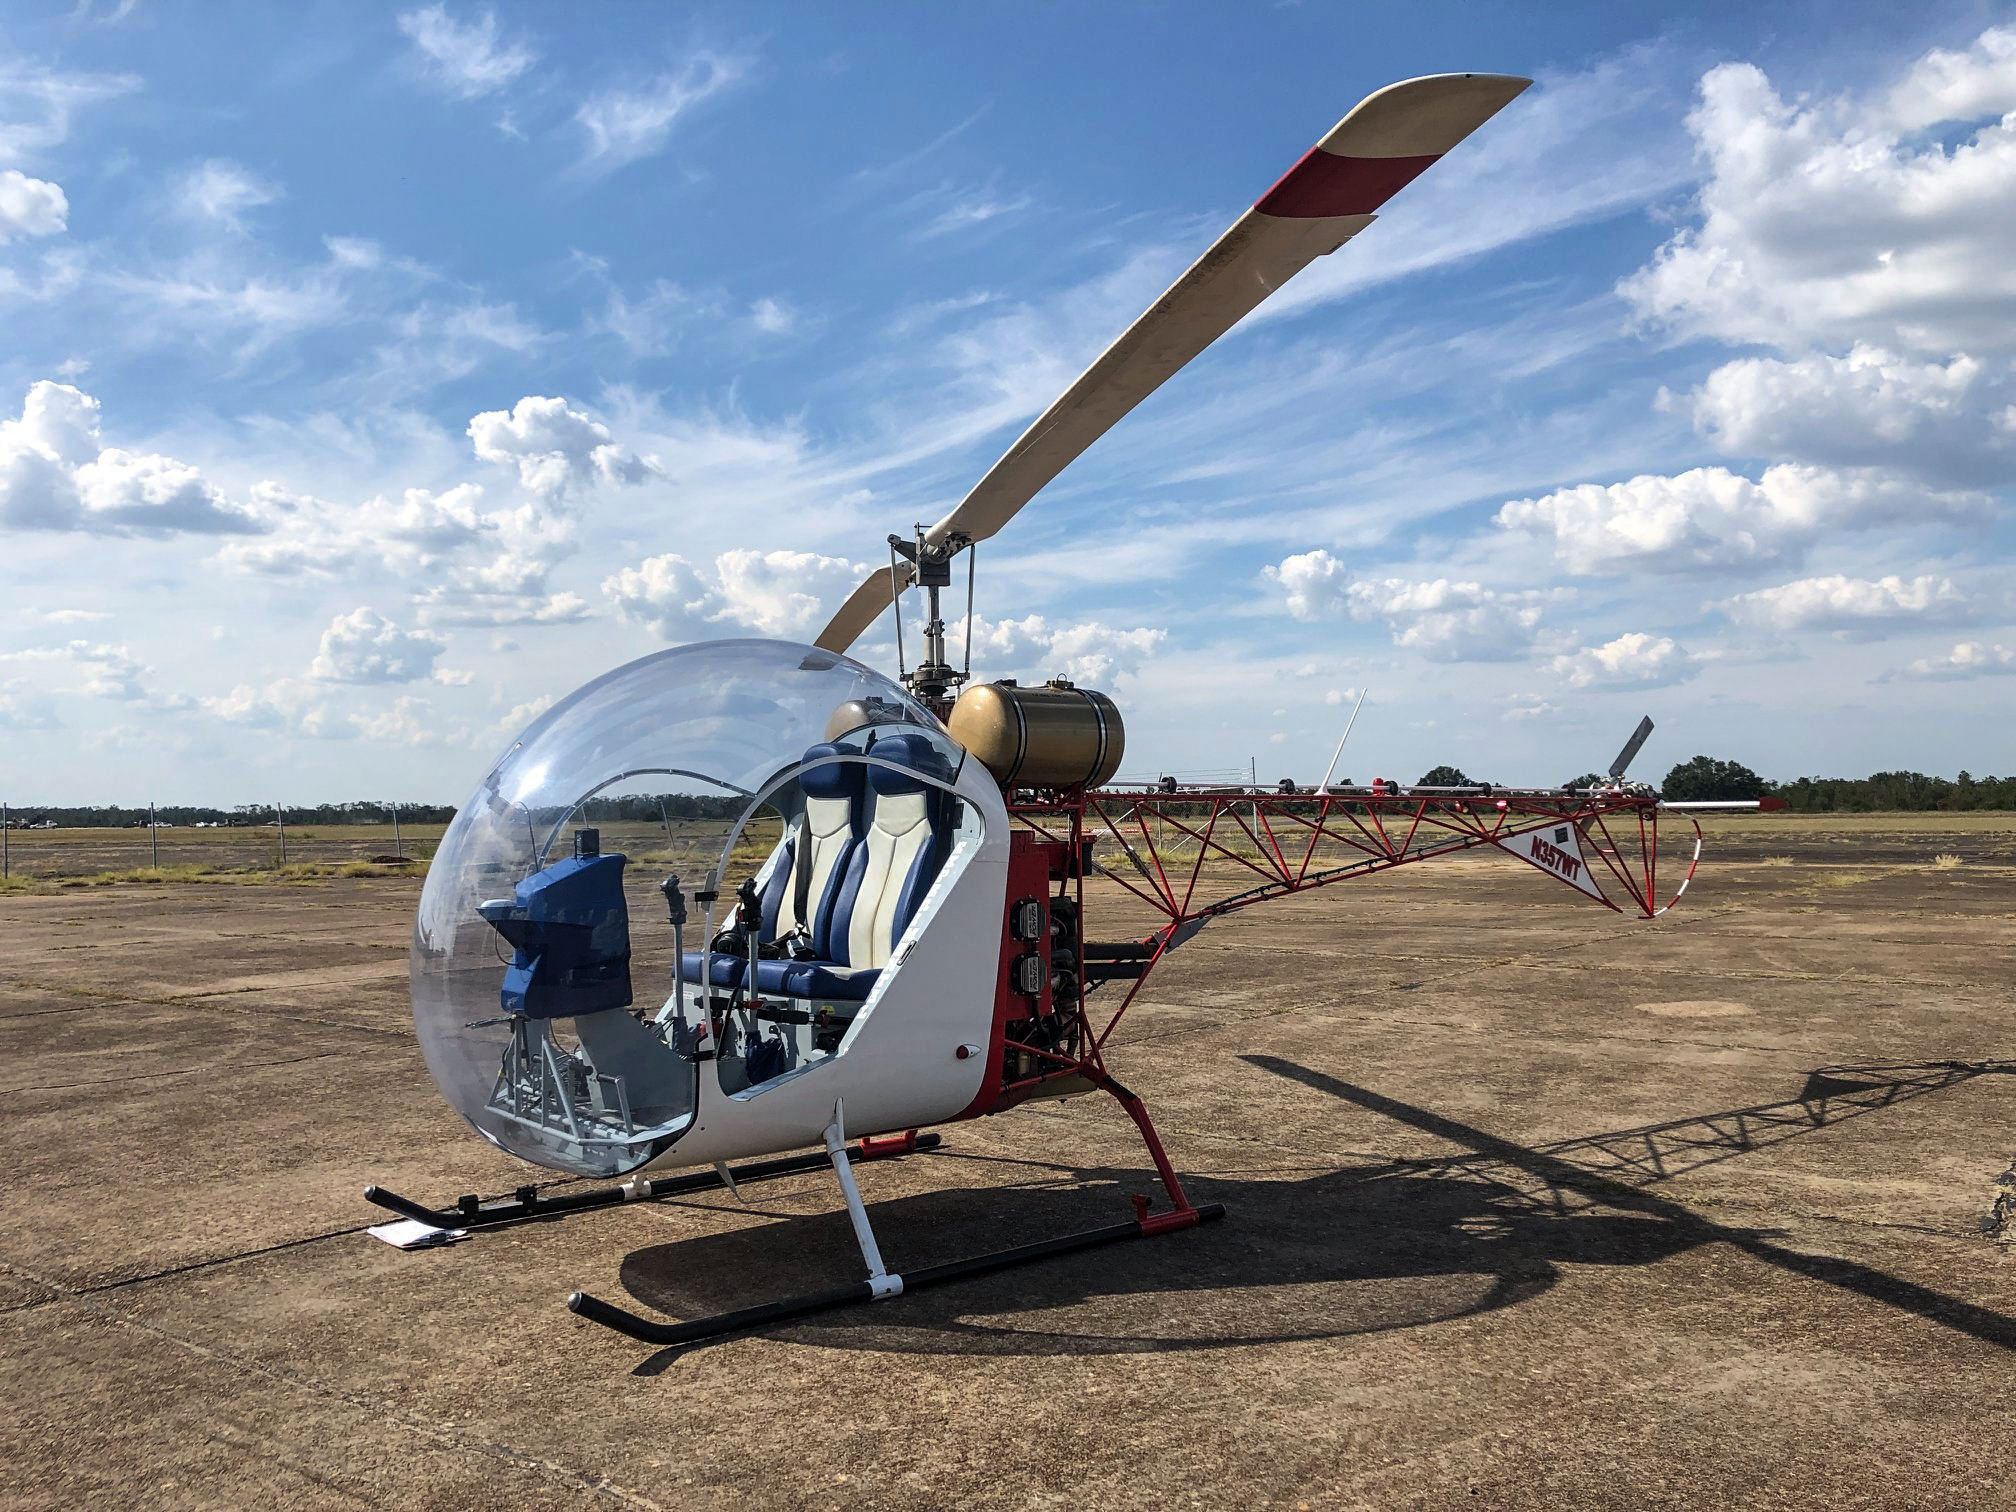 safari 400 helicopter